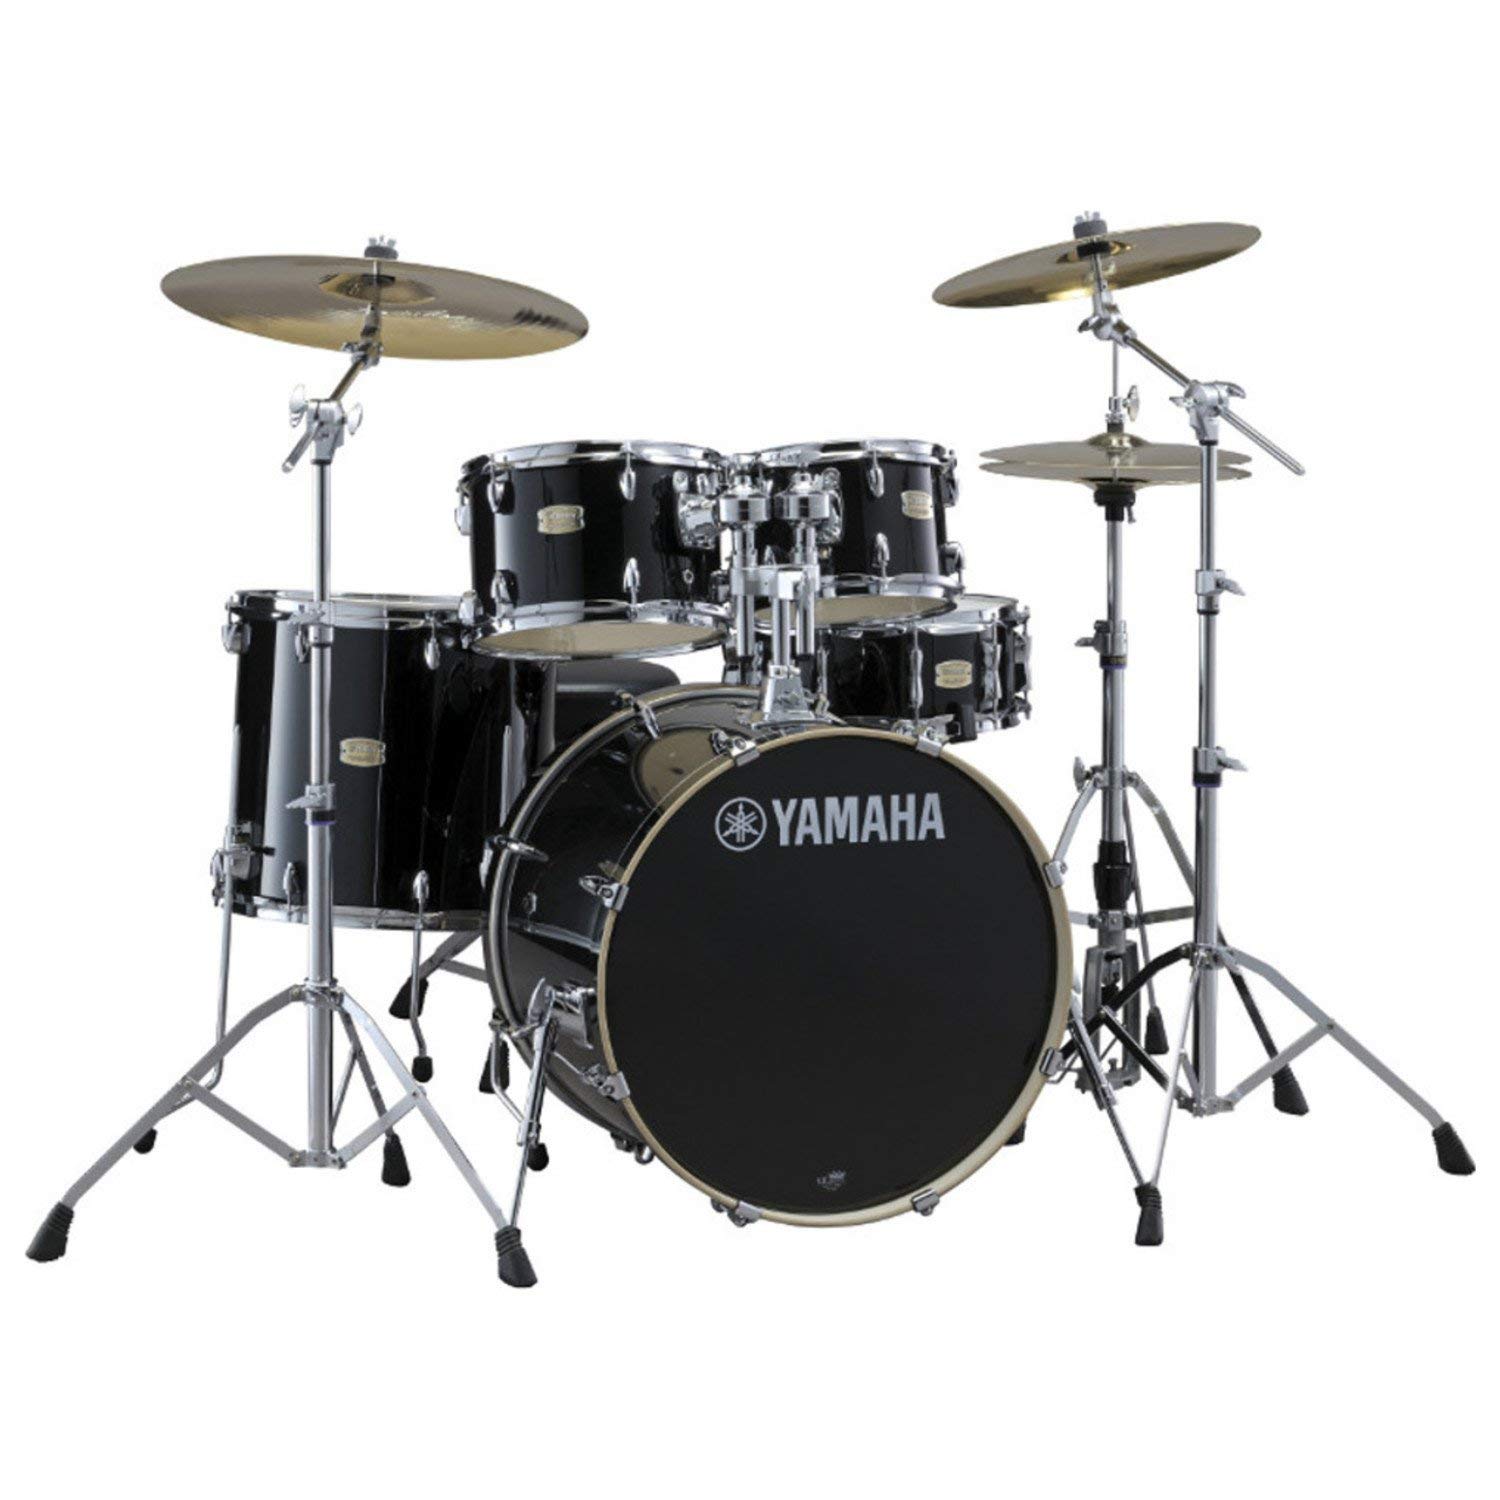 drum set brands to avoid	